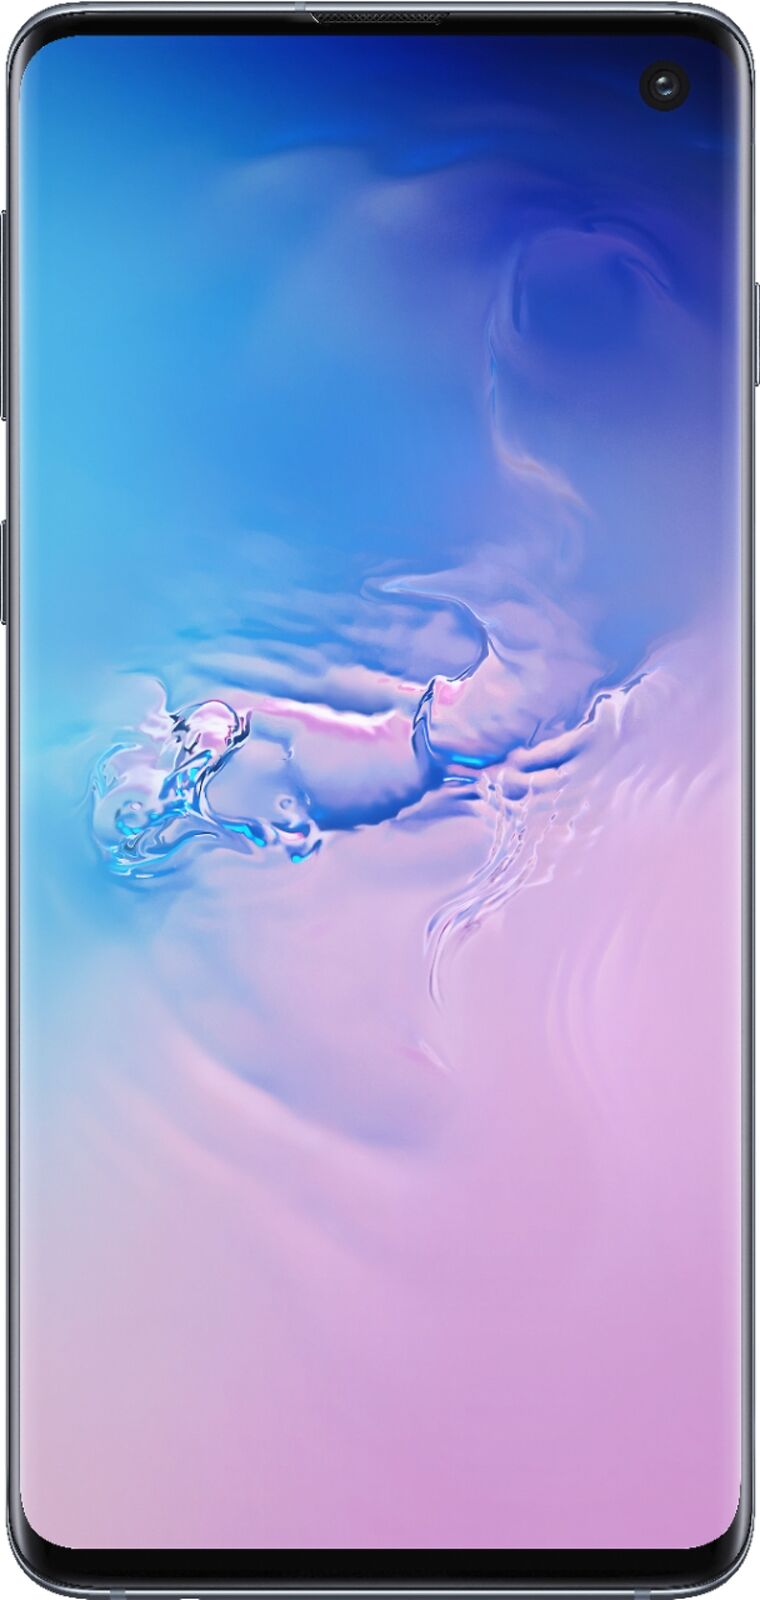 Galaxy S10 128GB - Prism Blue - Locked Sprint